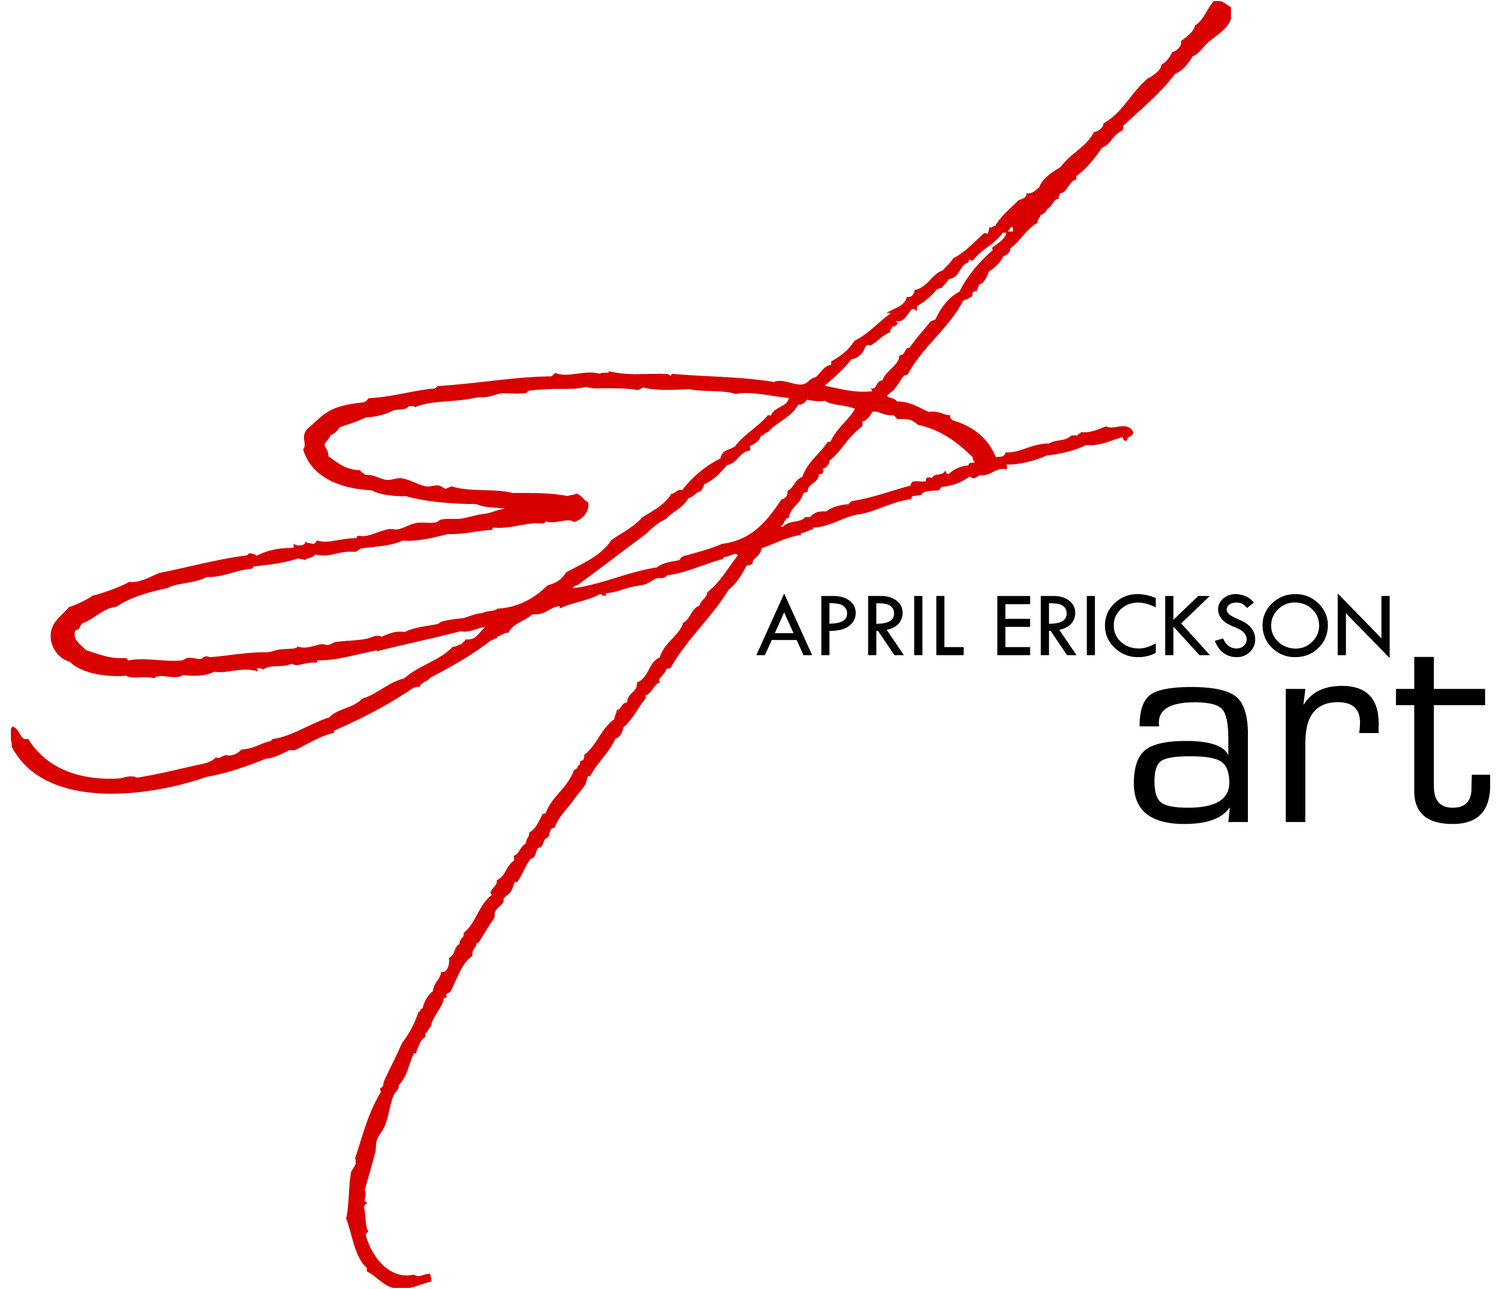 ARTIST APRIL ERICKSON